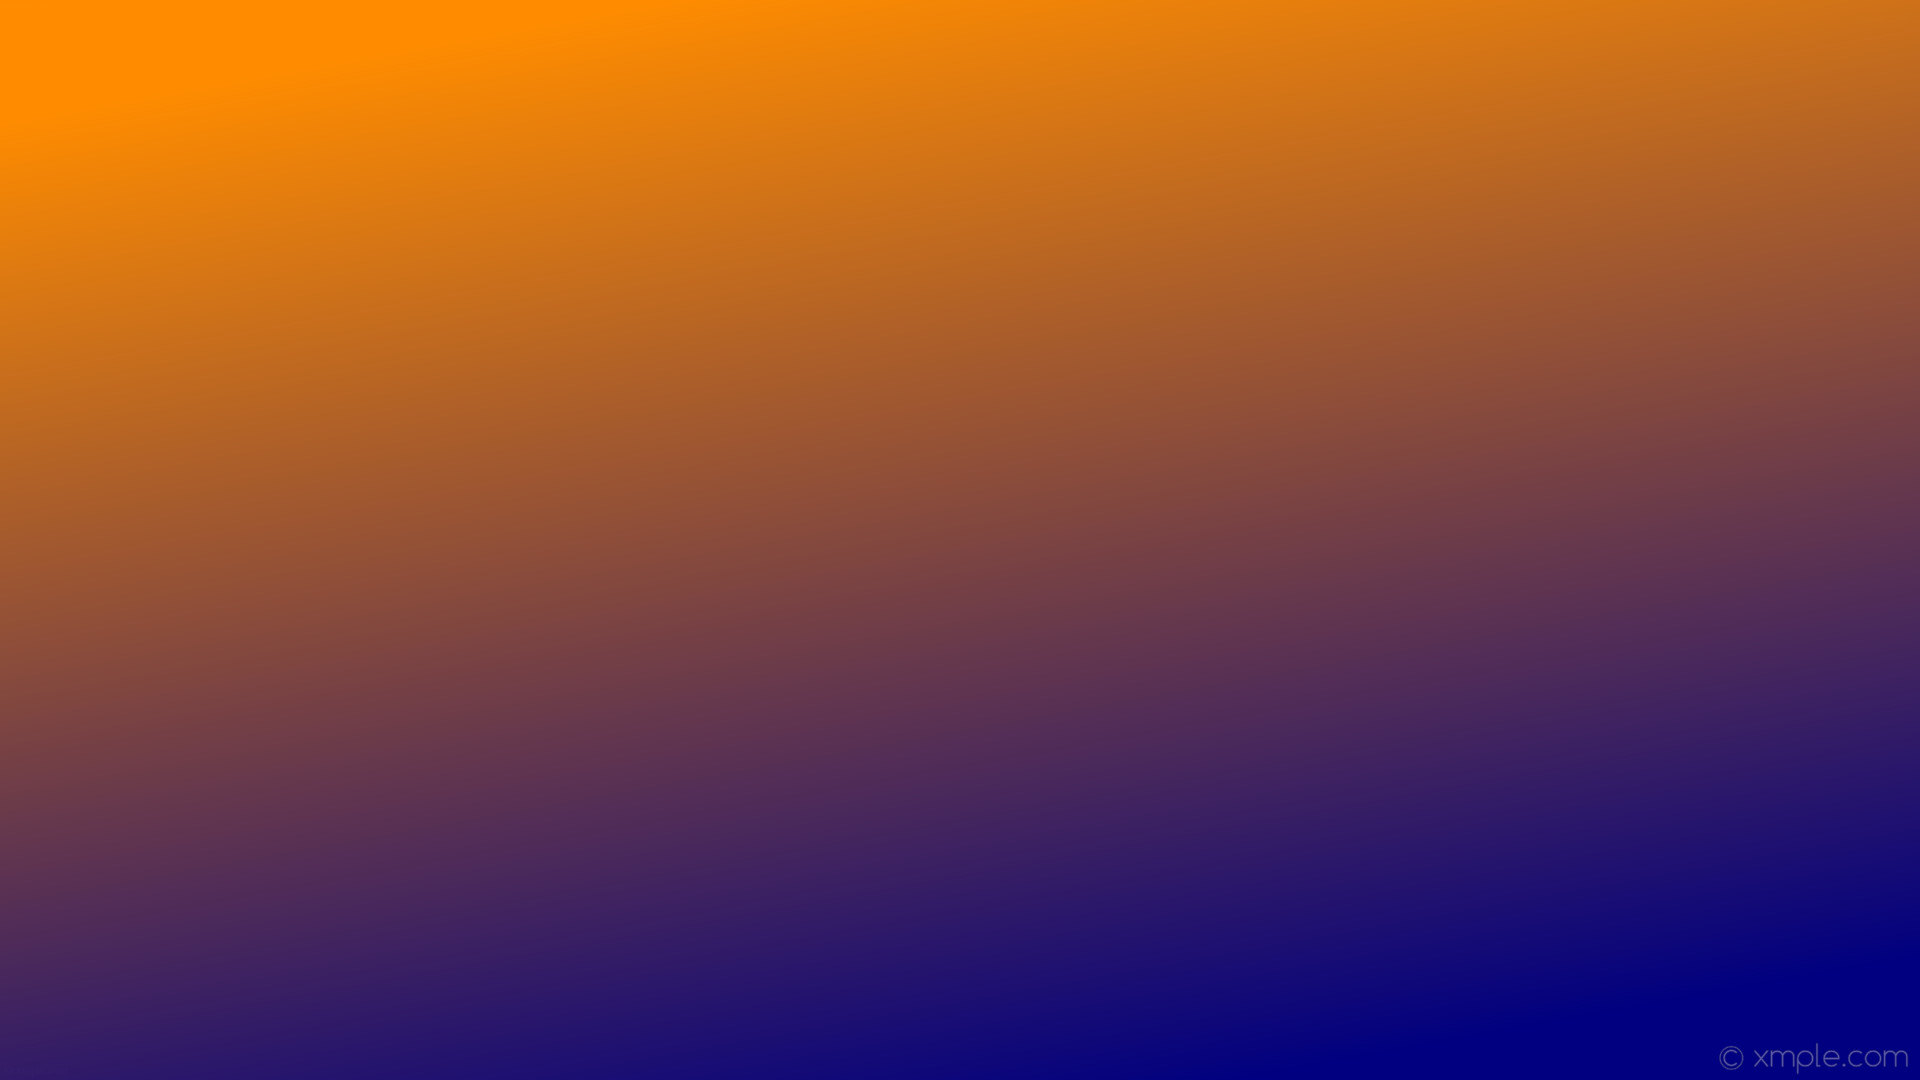 Wallpaper Gradient Blue Orange Linear Navy Dark Orange Blue And Orange Ombre 19x1080 Wallpaper Teahub Io